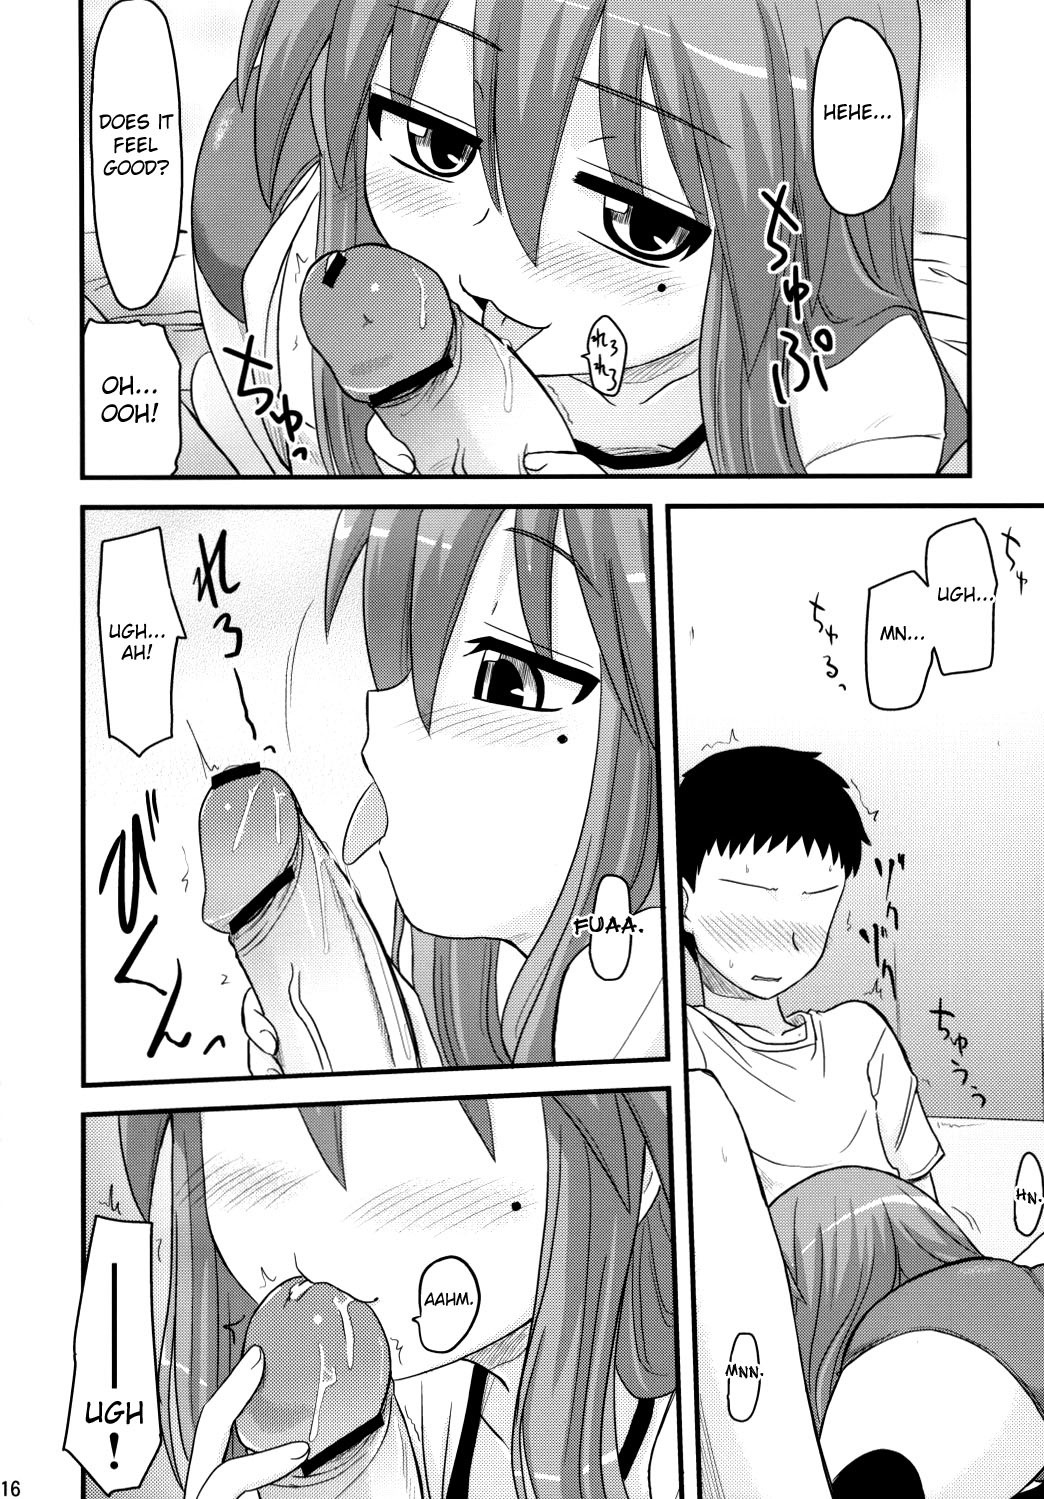 Konata and Oh-zu 4 people each and every one + 1 hentai manga picture 12